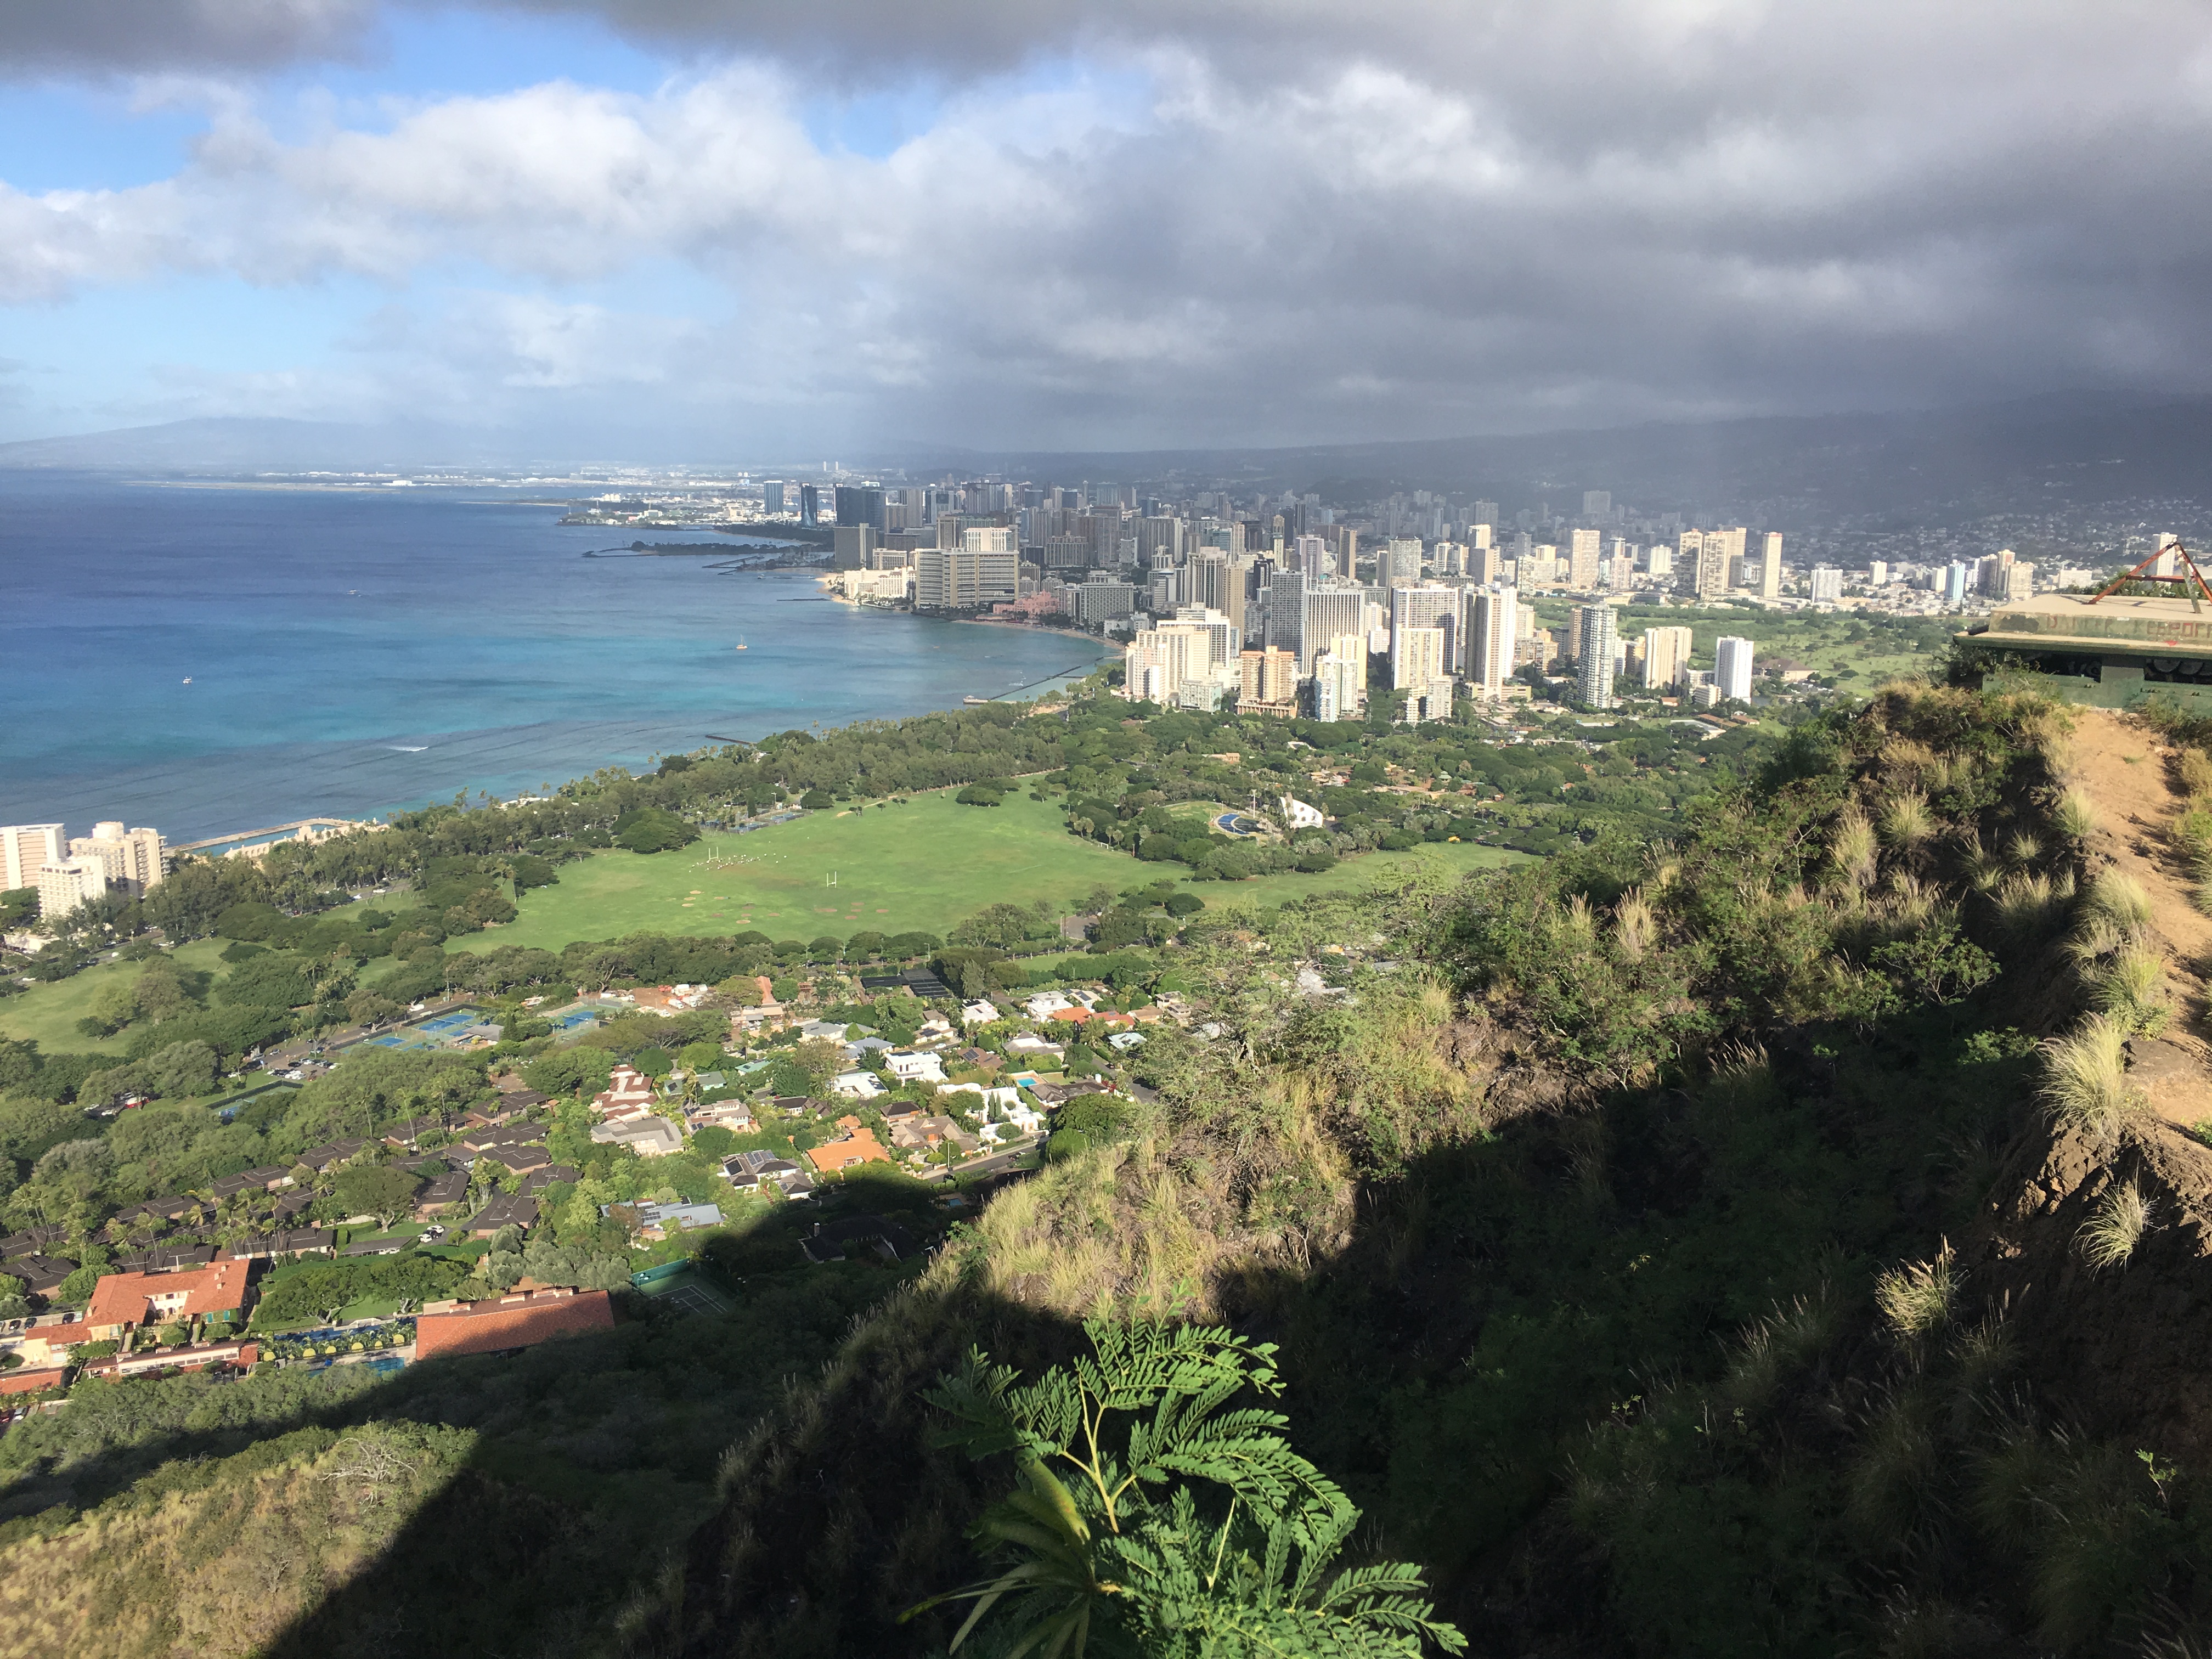 View towards Waikiki atop Diamond Head